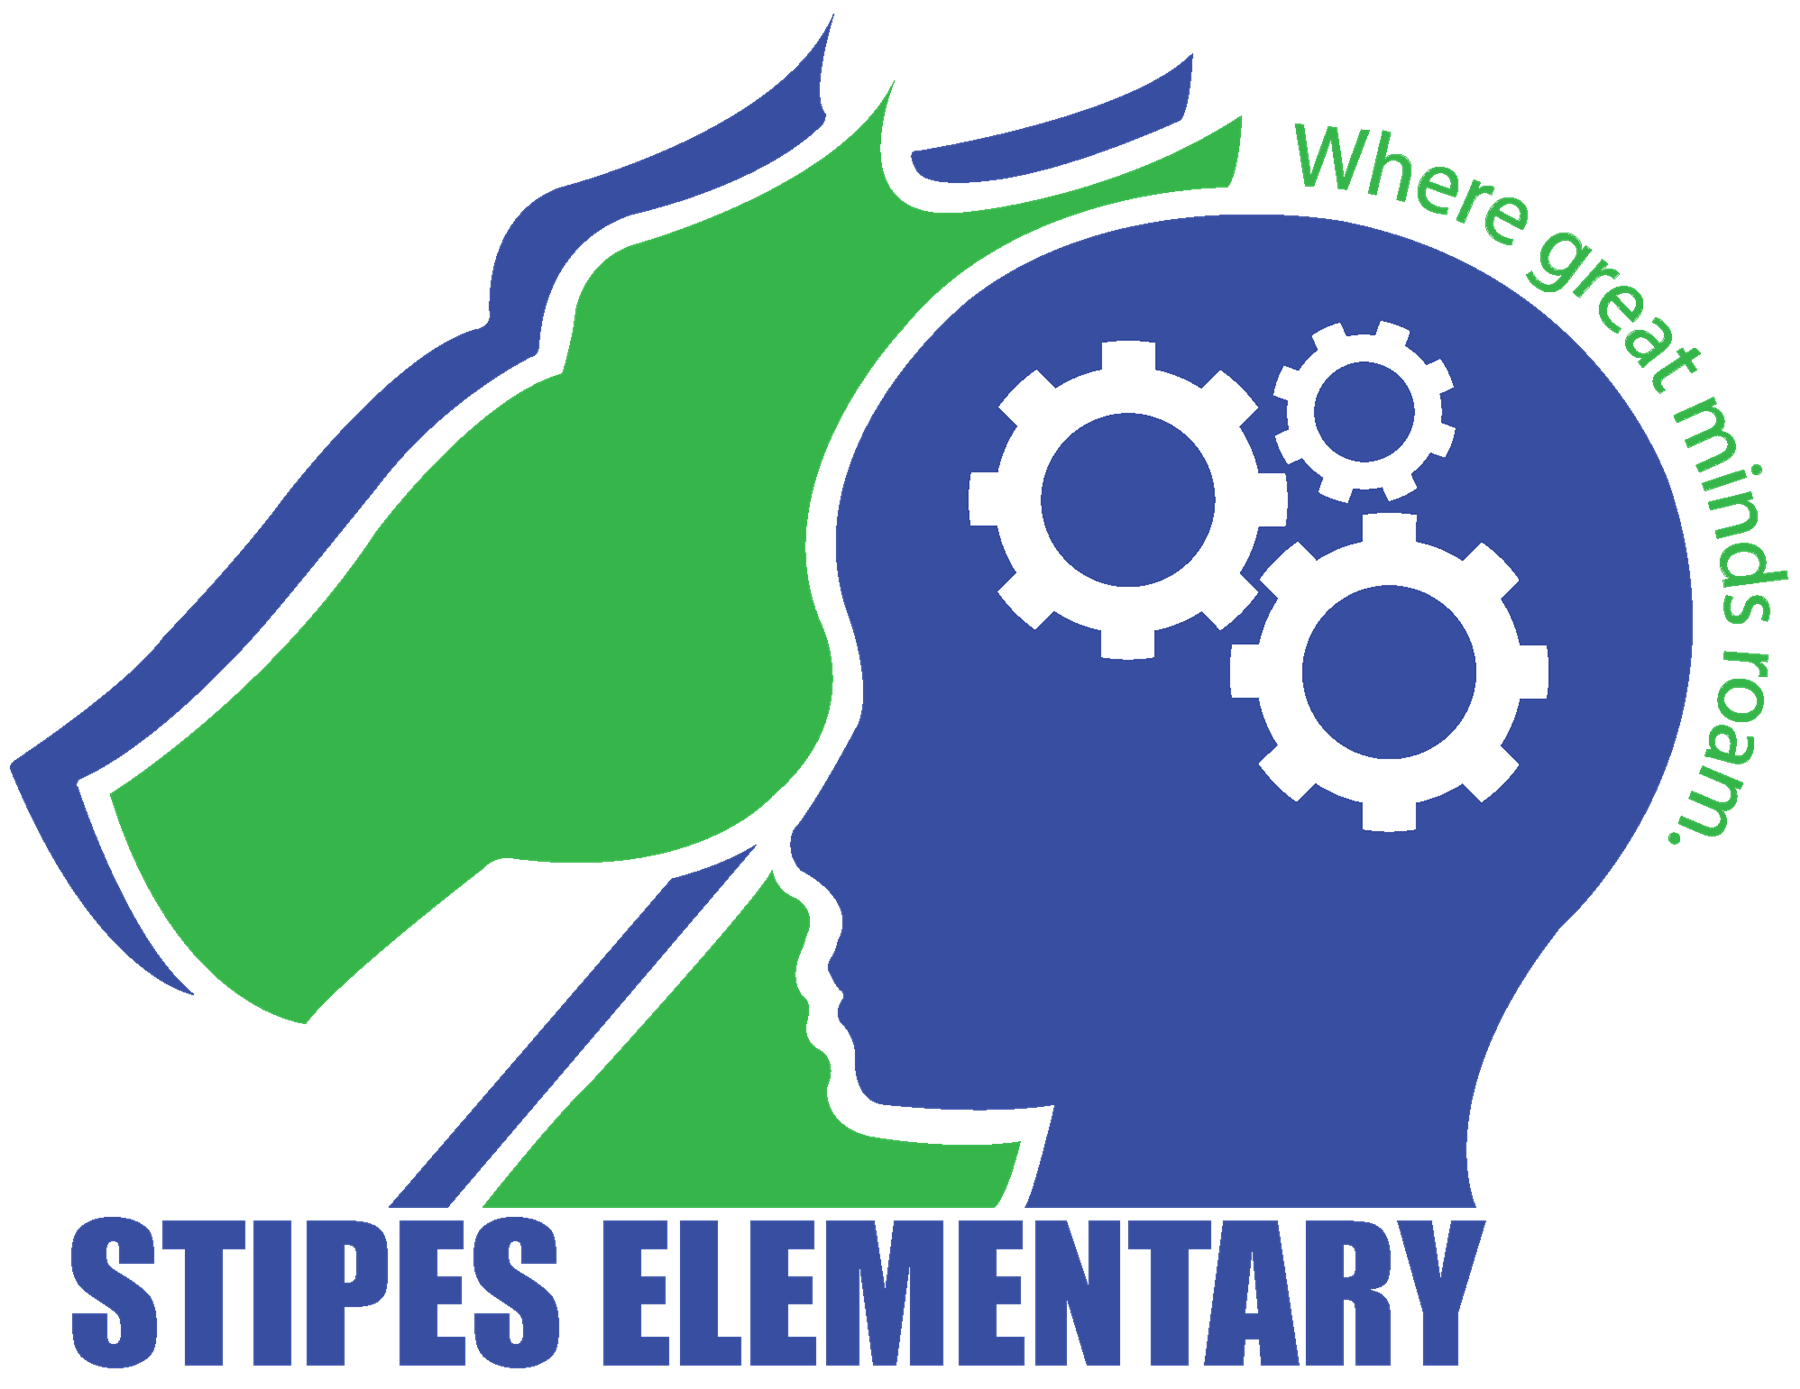 Stipes Elementary: Where great minds roam